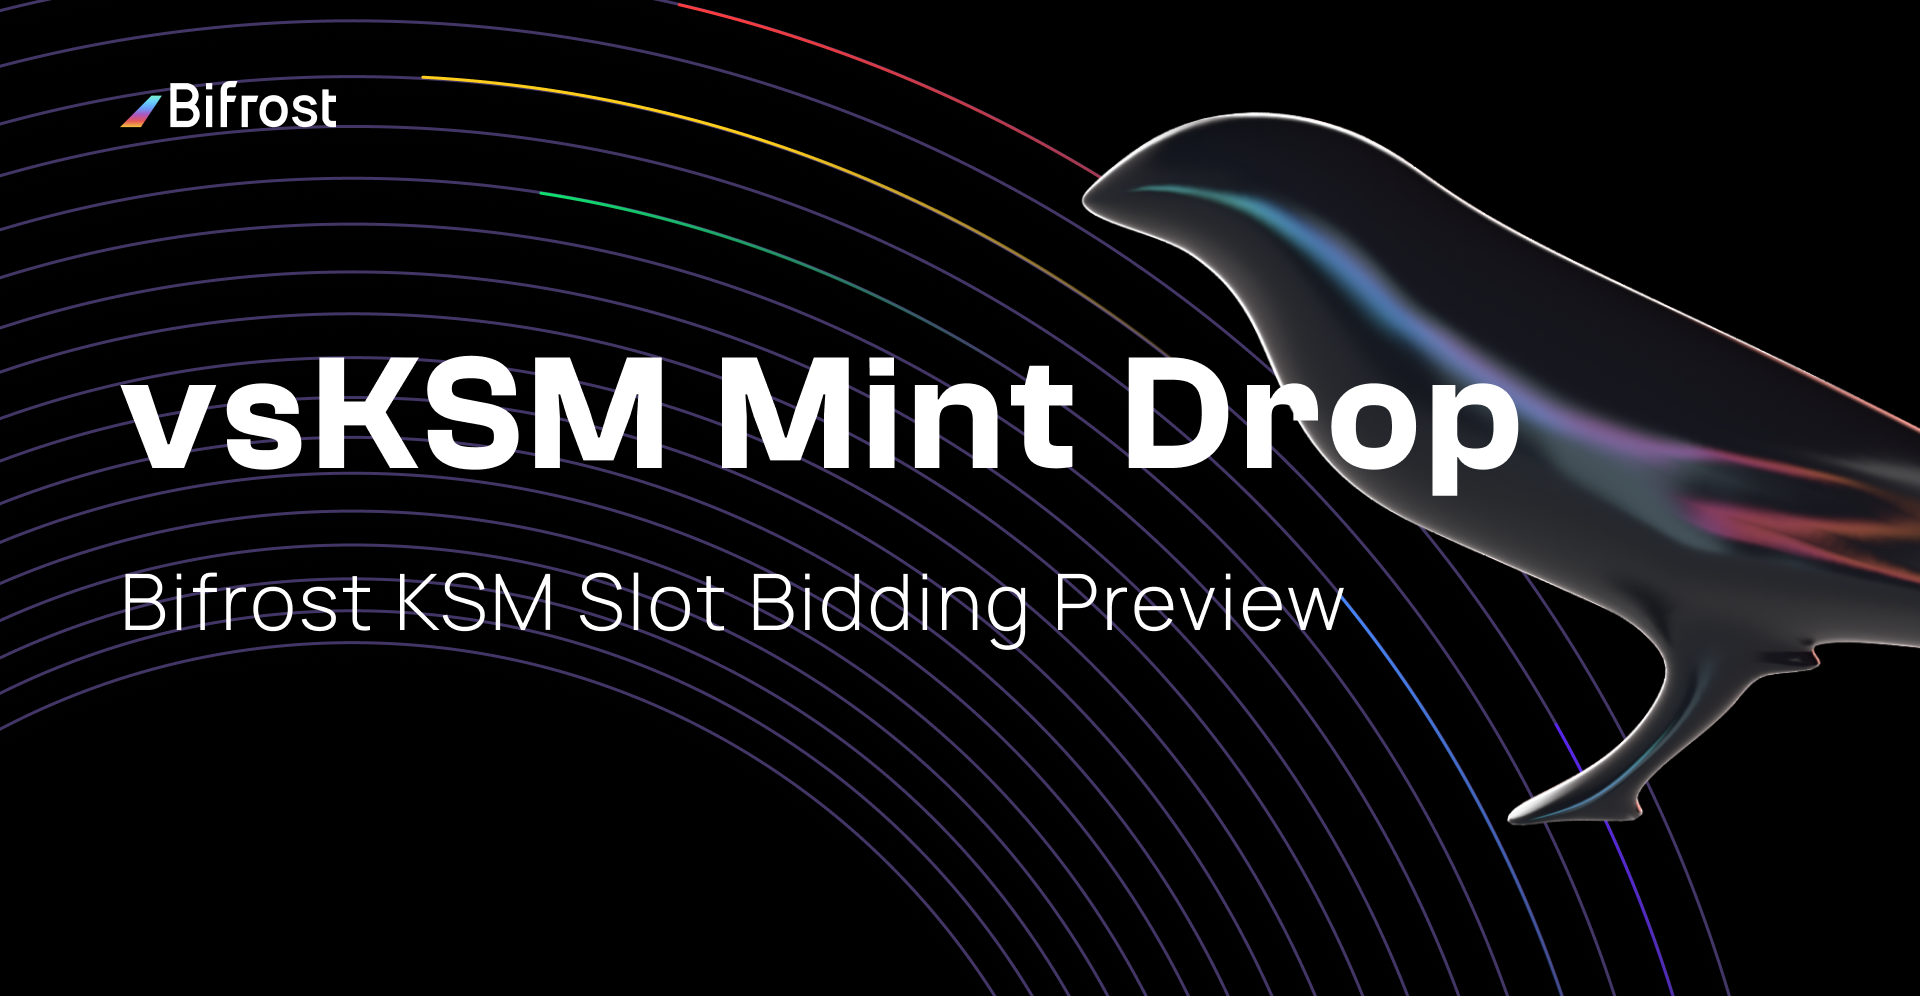 Bifrost KSM Slot Bidding Preview, vsKSM Mint Drop is coming